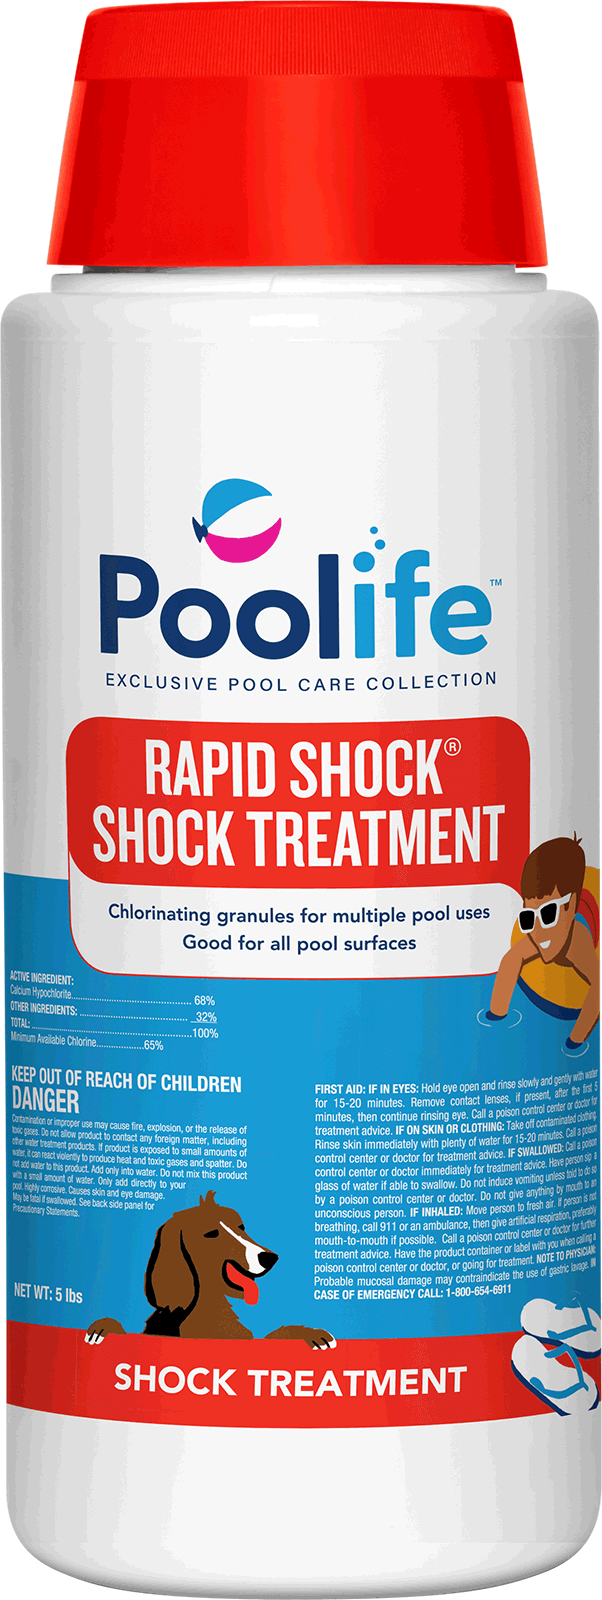 Poolife Rapid Shock